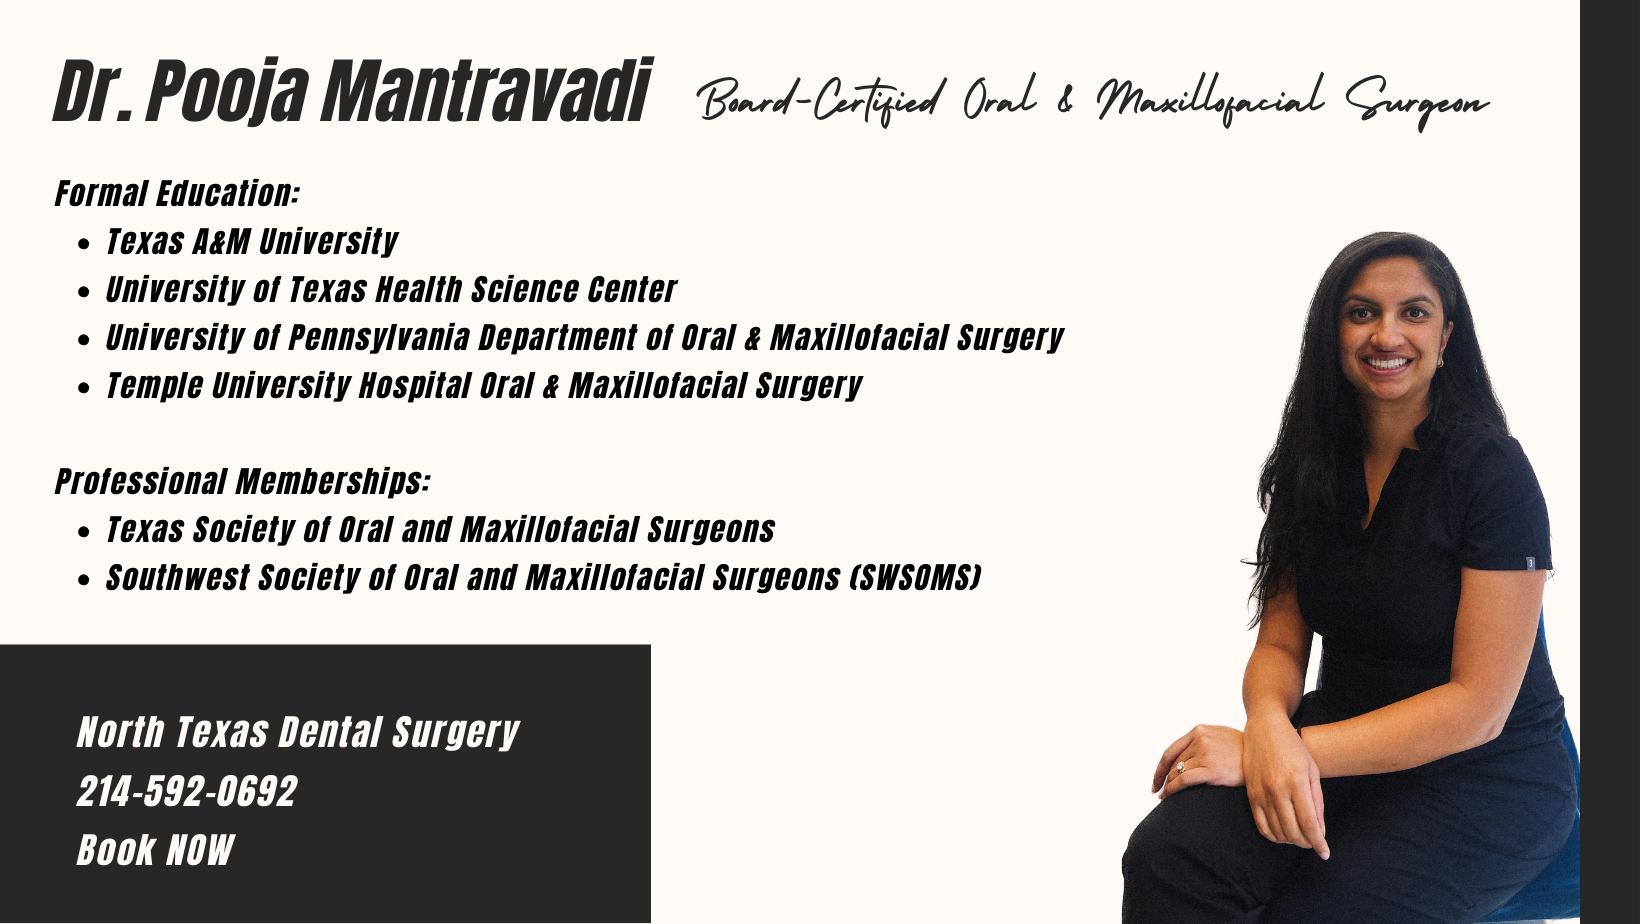 Dr Matravadi